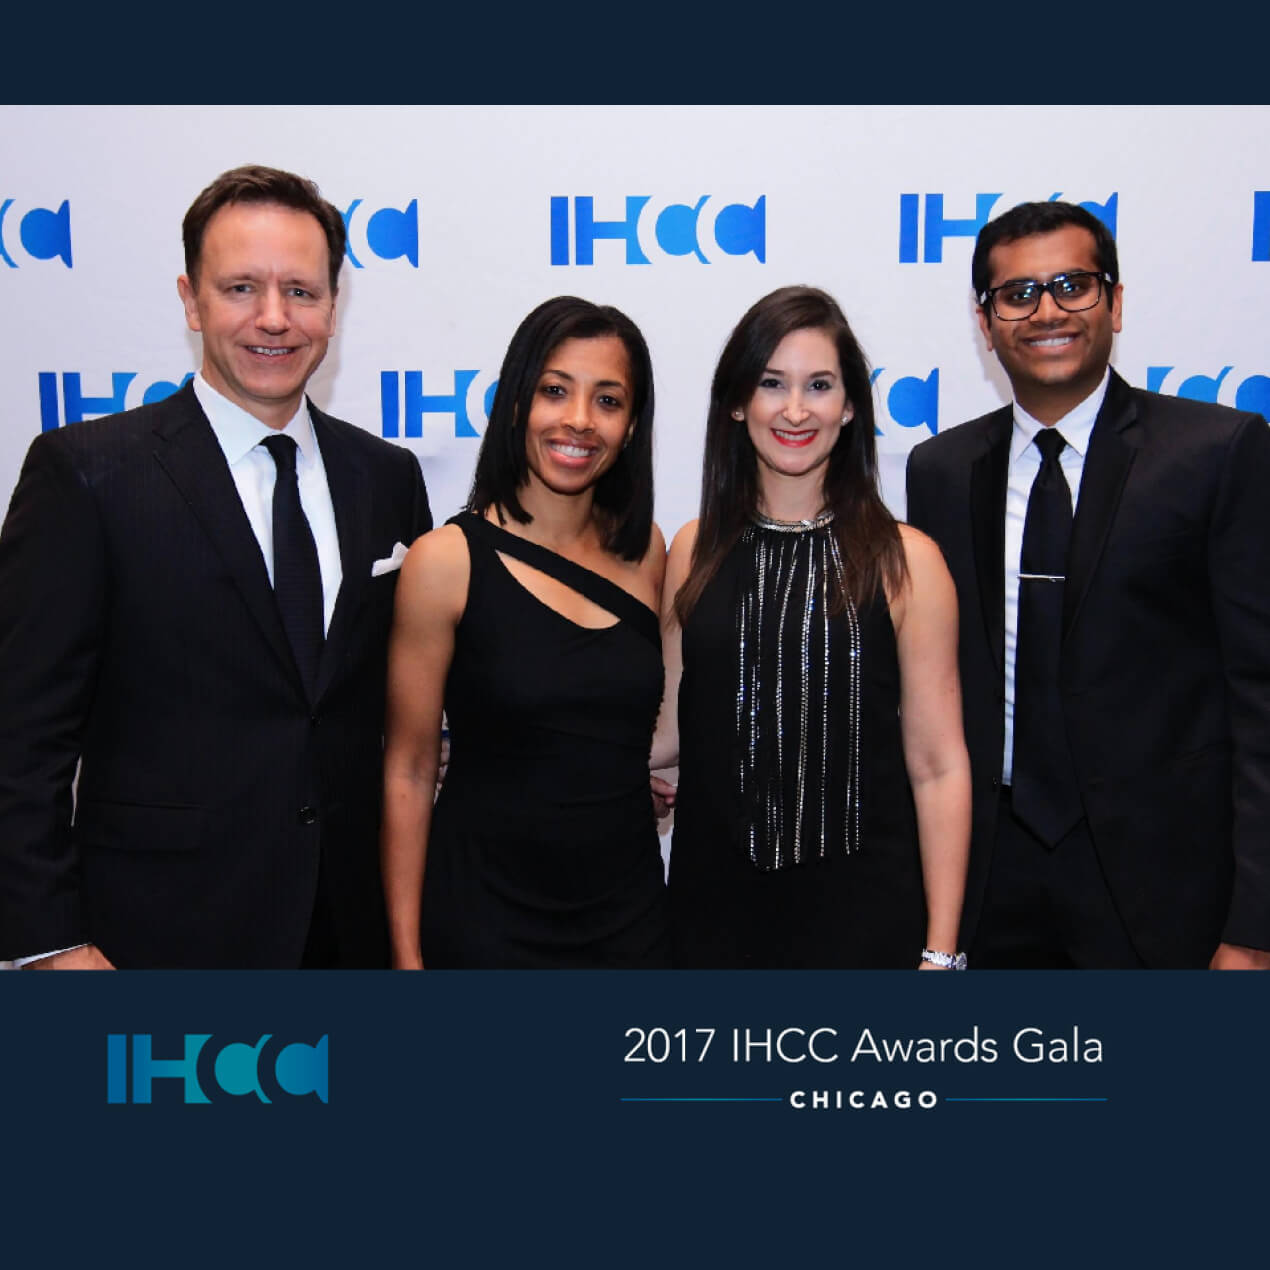 The 2017 IHCC Awards Ga